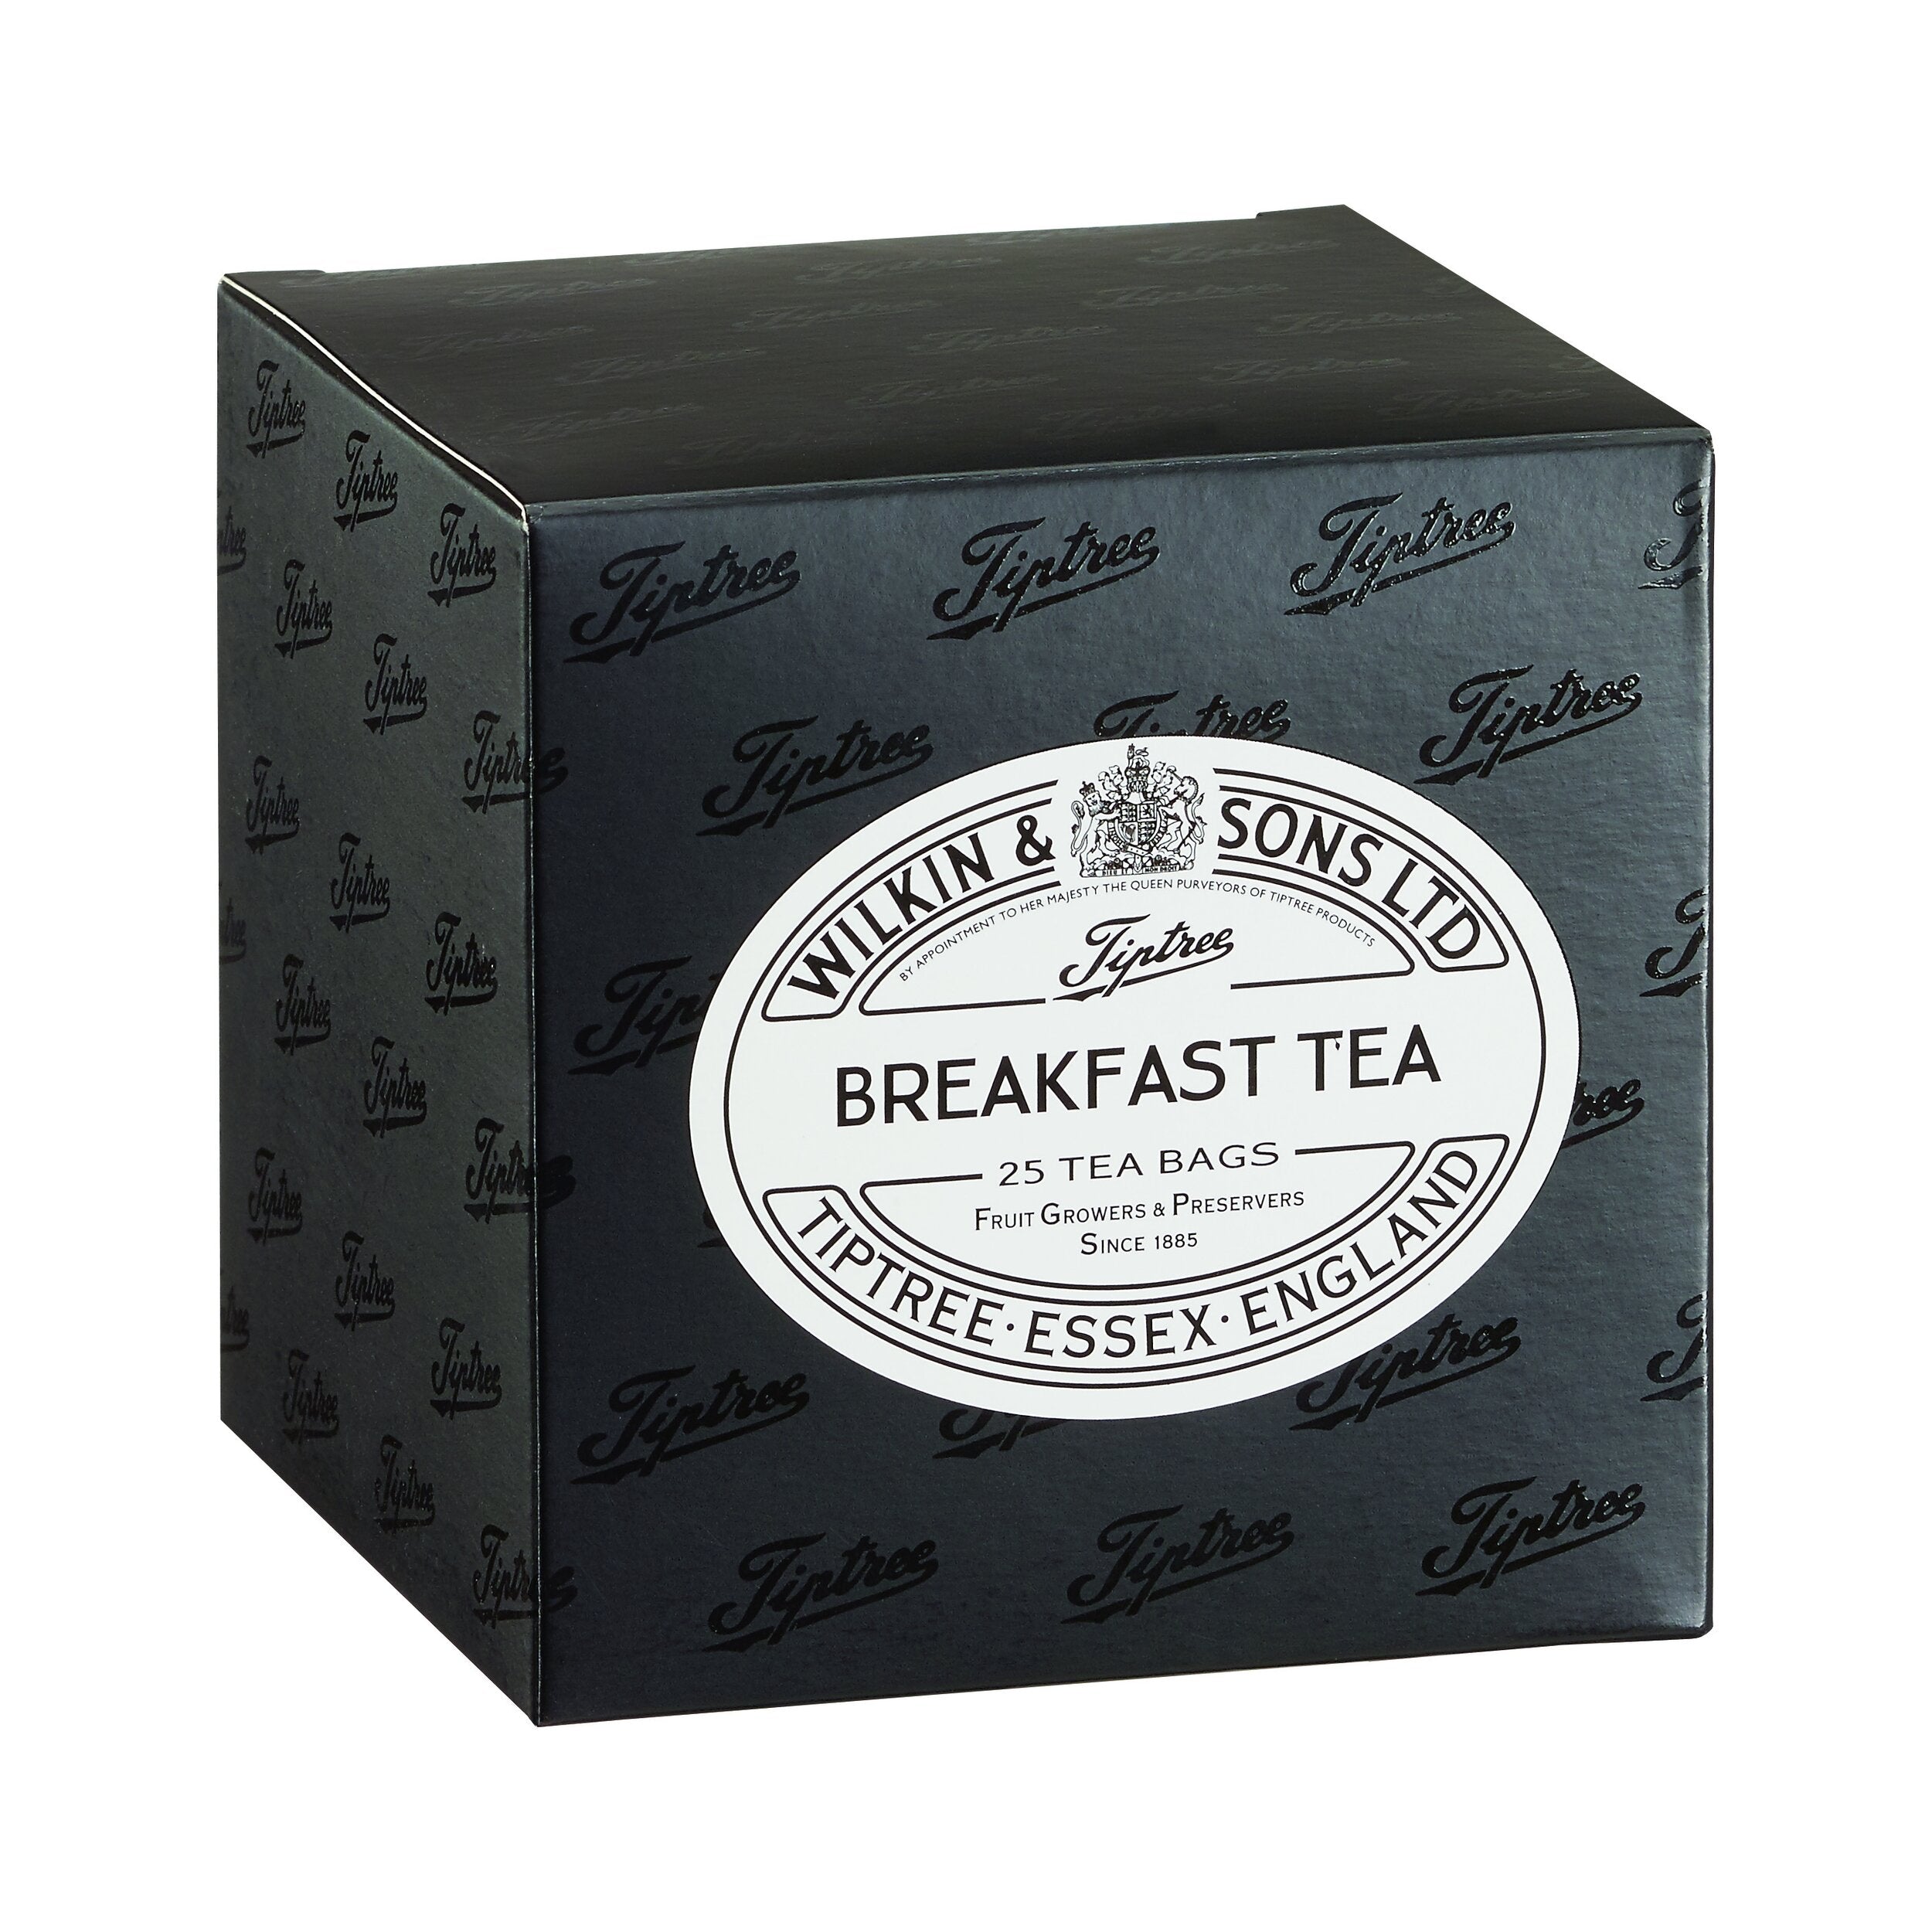 Awake English Breakfast Tea Tea Bag by Unilever N.V TZO20070